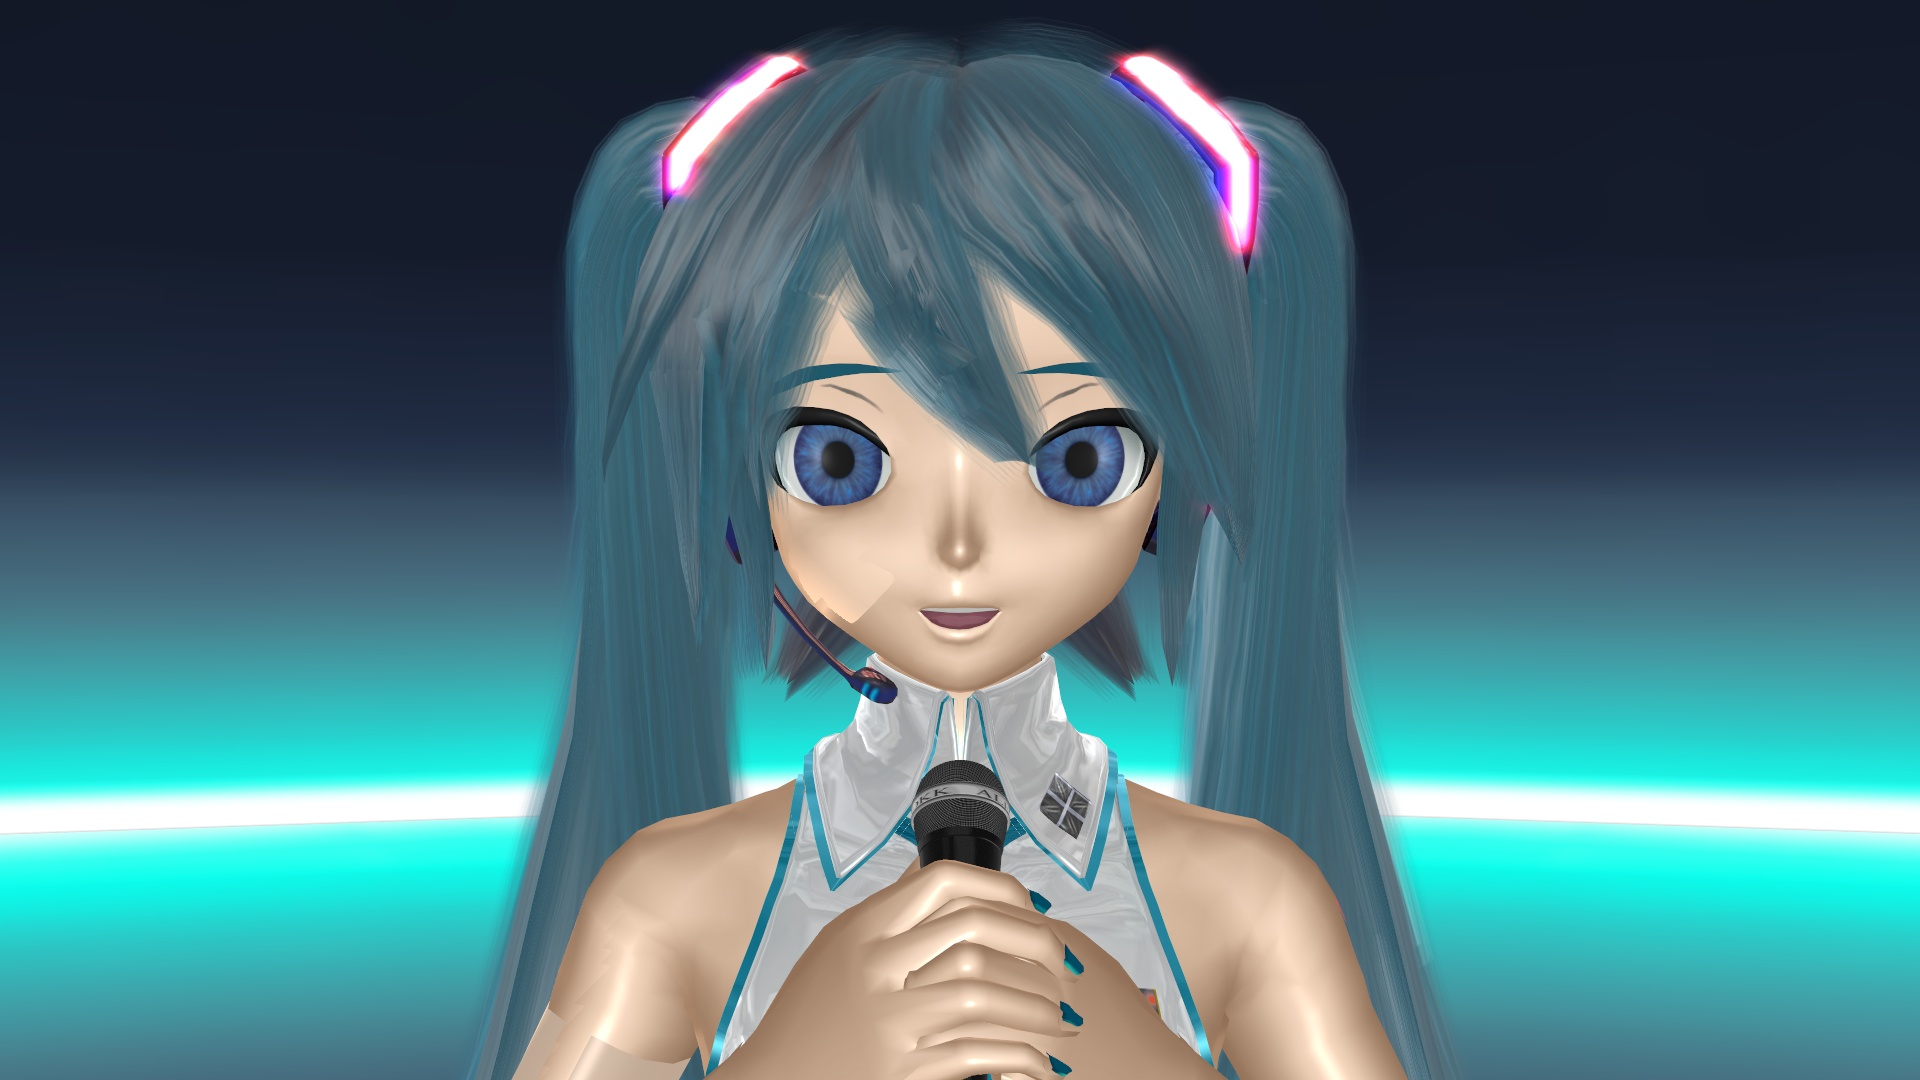 Descarga gratis la imagen Vocaloid, Ojos Azules, Micrófono, Animado, Pelo Azul, Hatsune Miku en el escritorio de tu PC